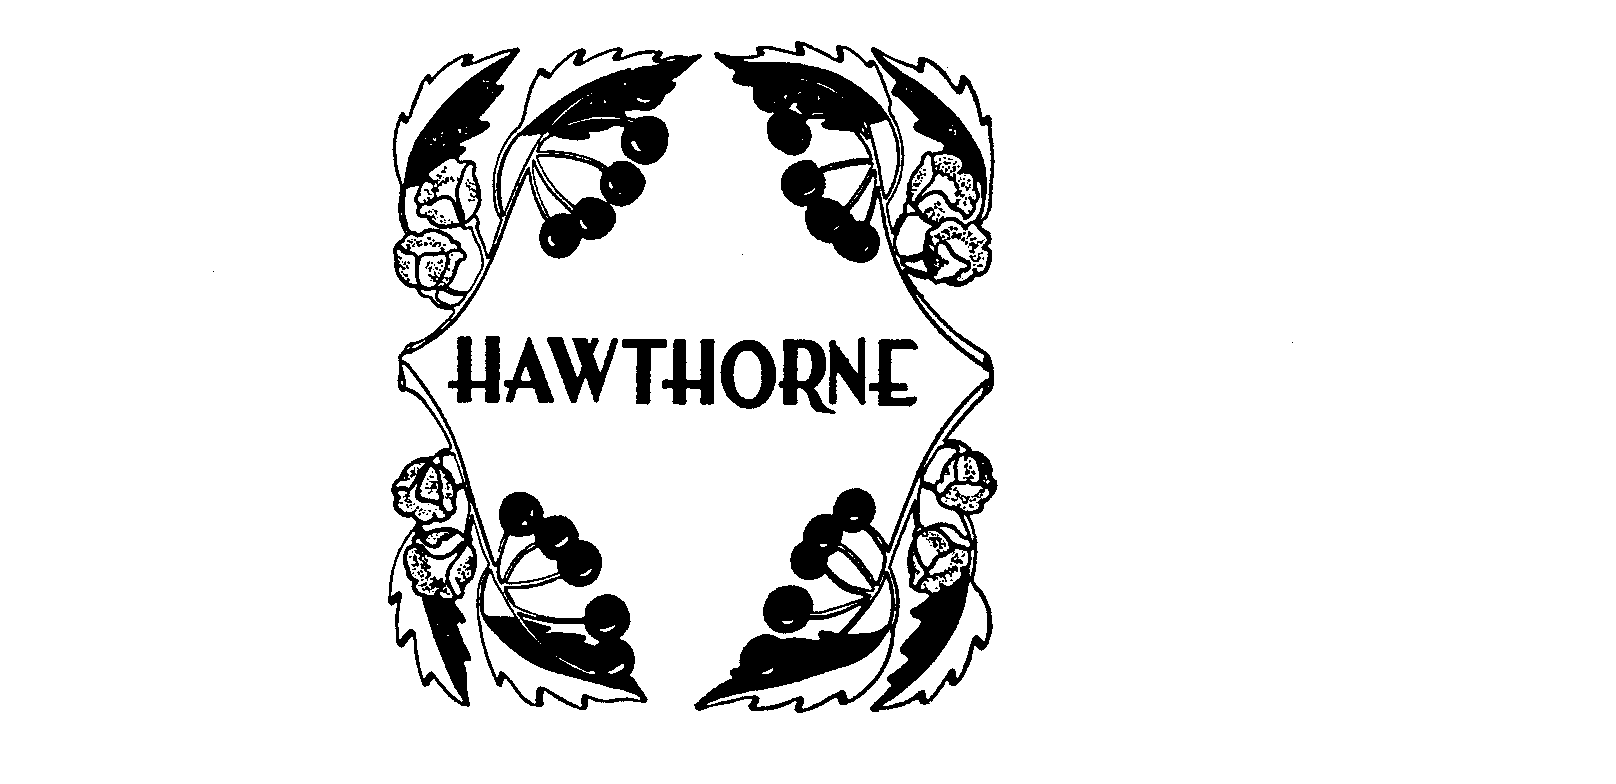 HAWTHORNE